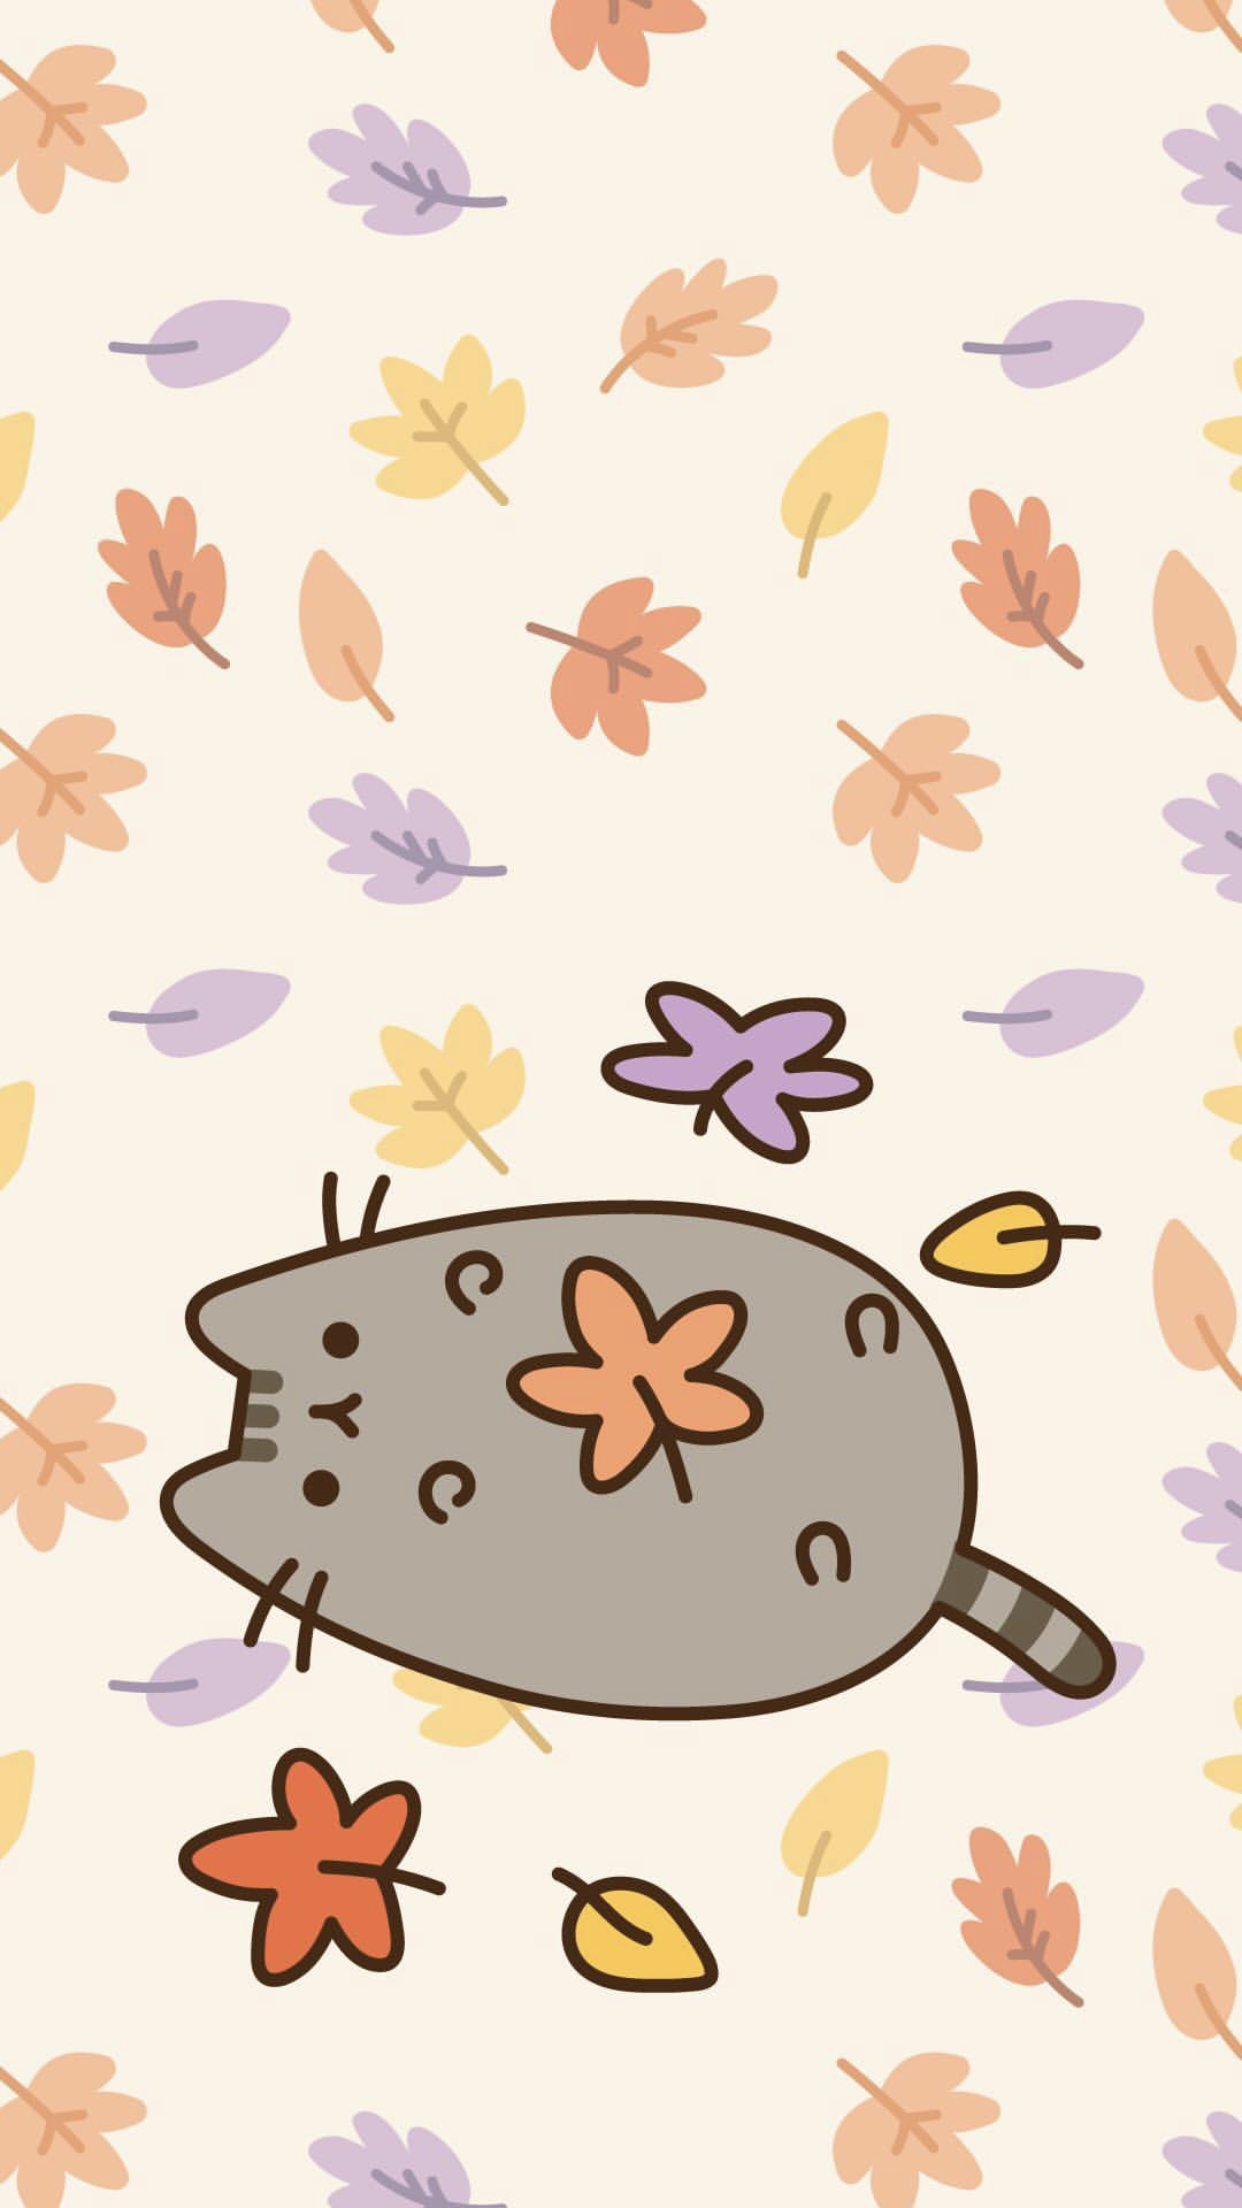 pusheen the cat iphone wallpaper. Fall wallpaper